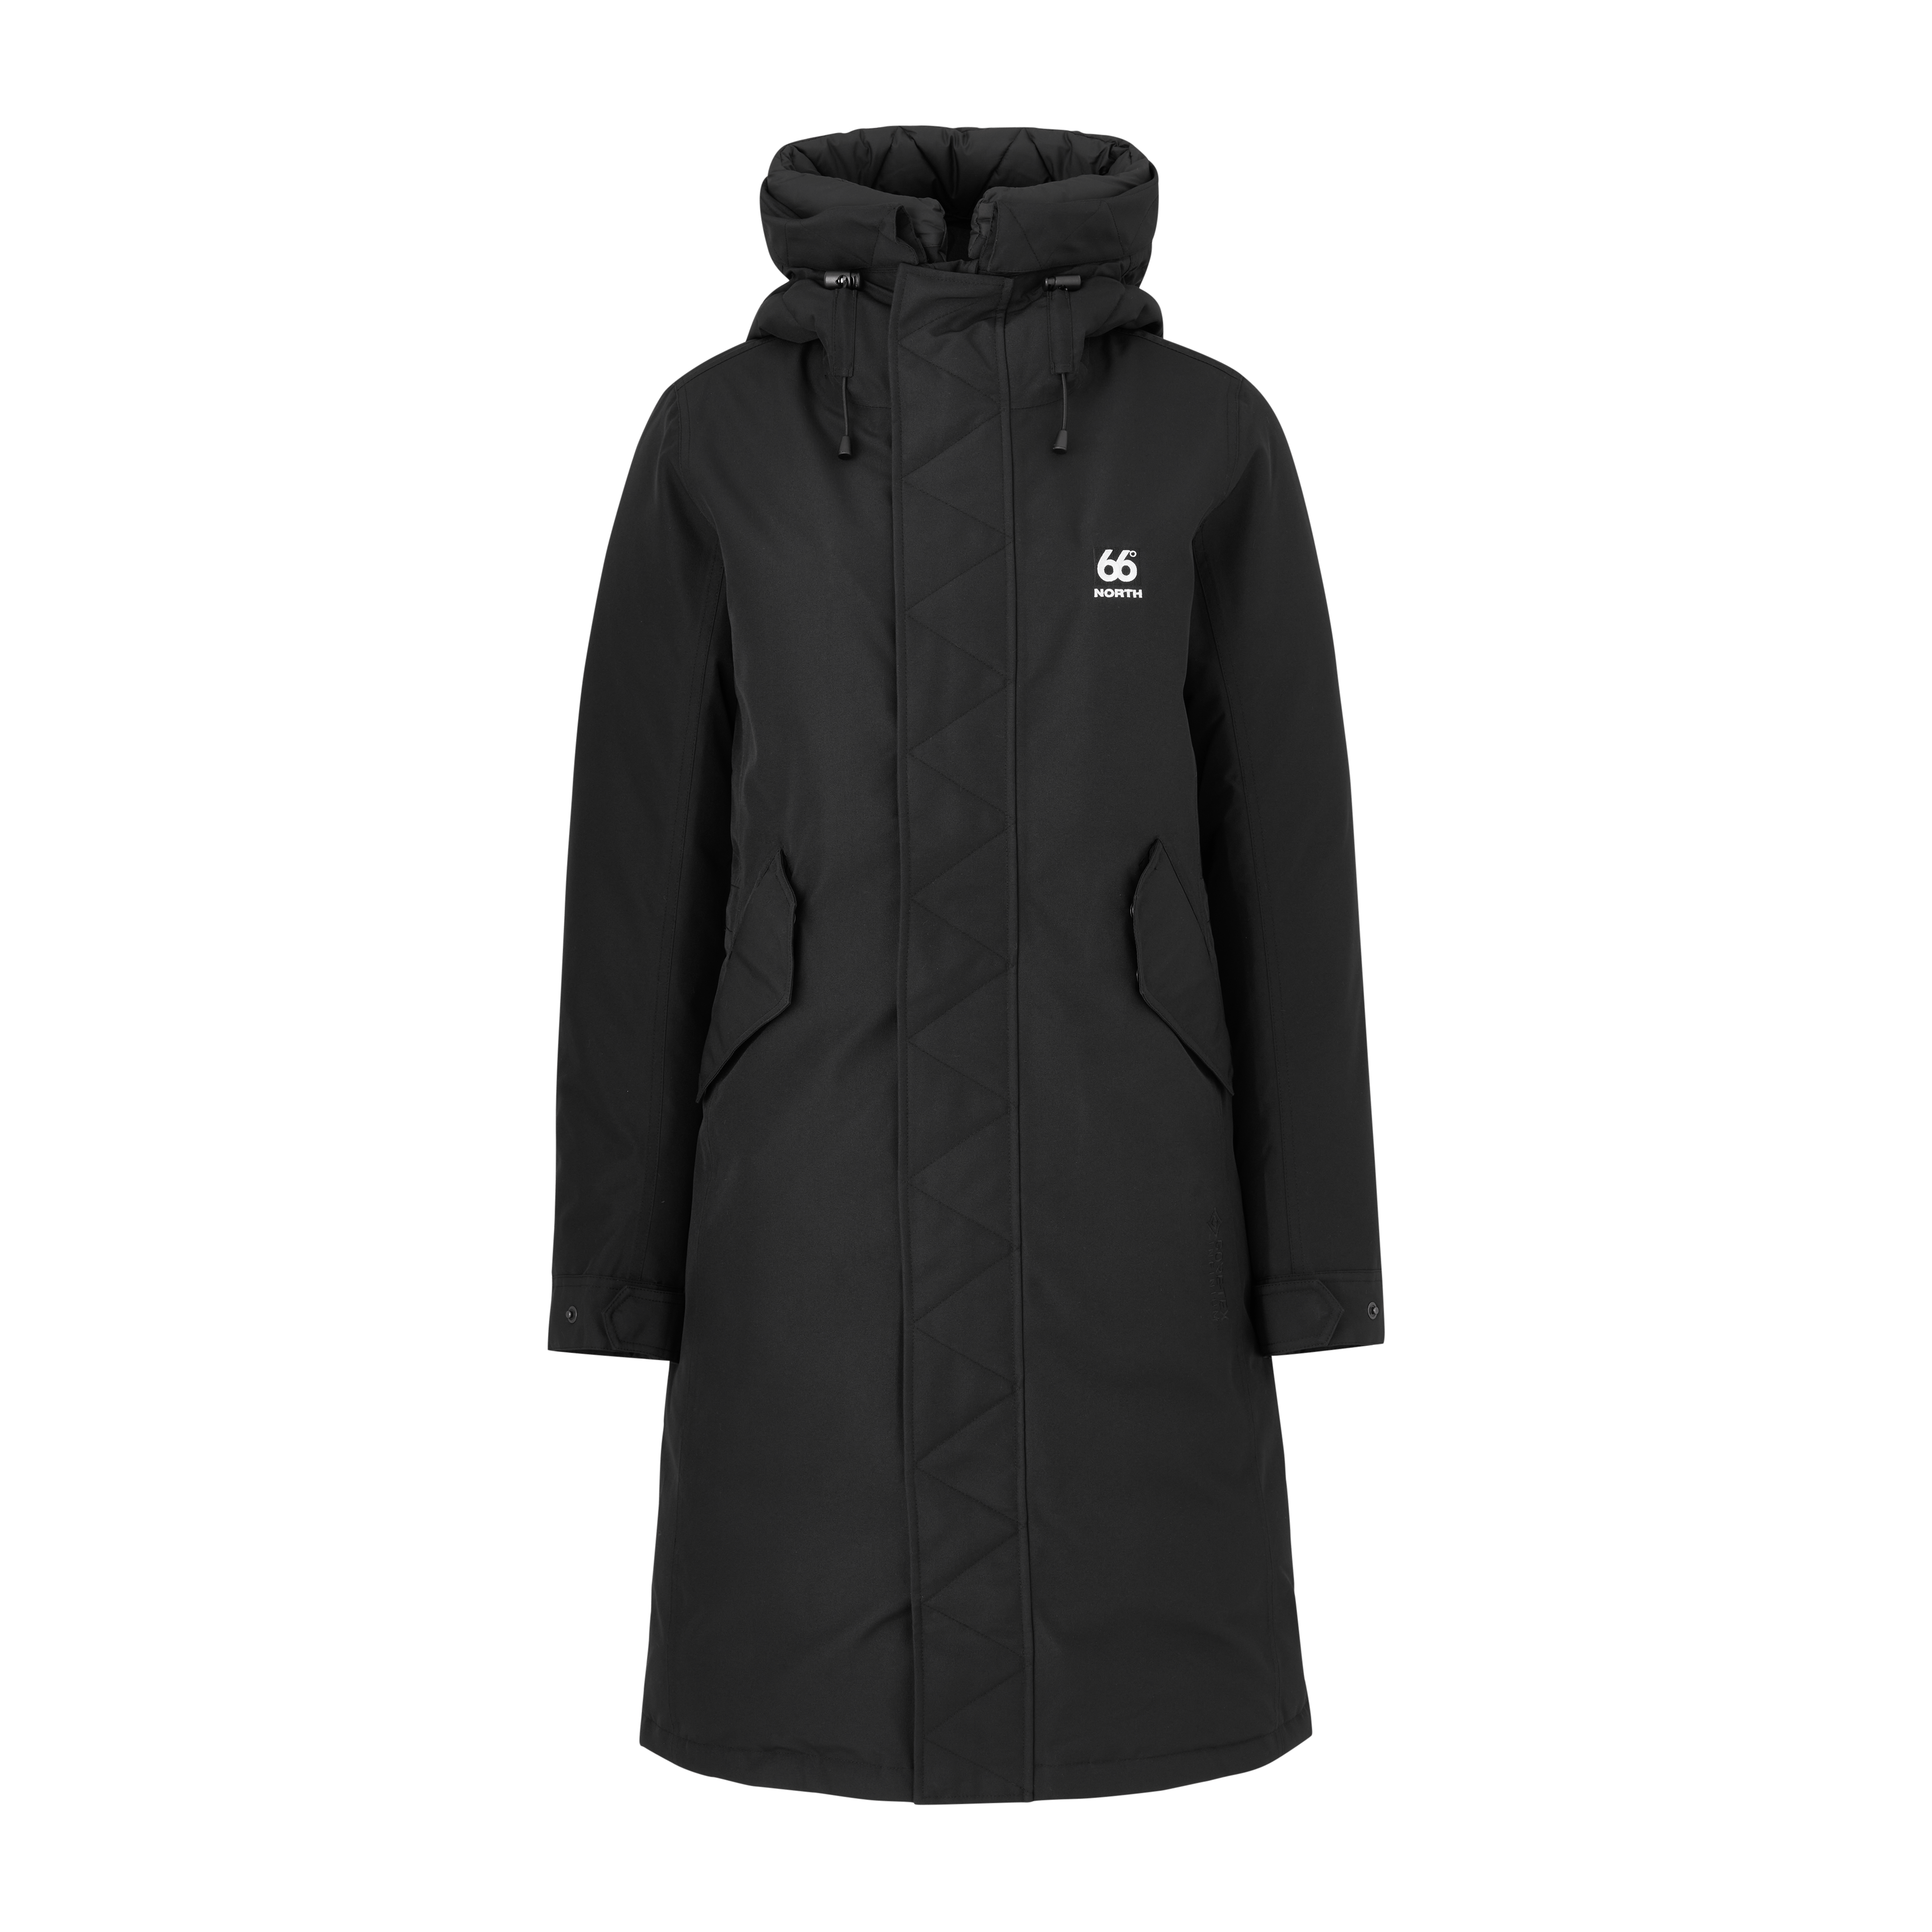 66 North Women's Hofsjökull Jackets & Coats In Black 